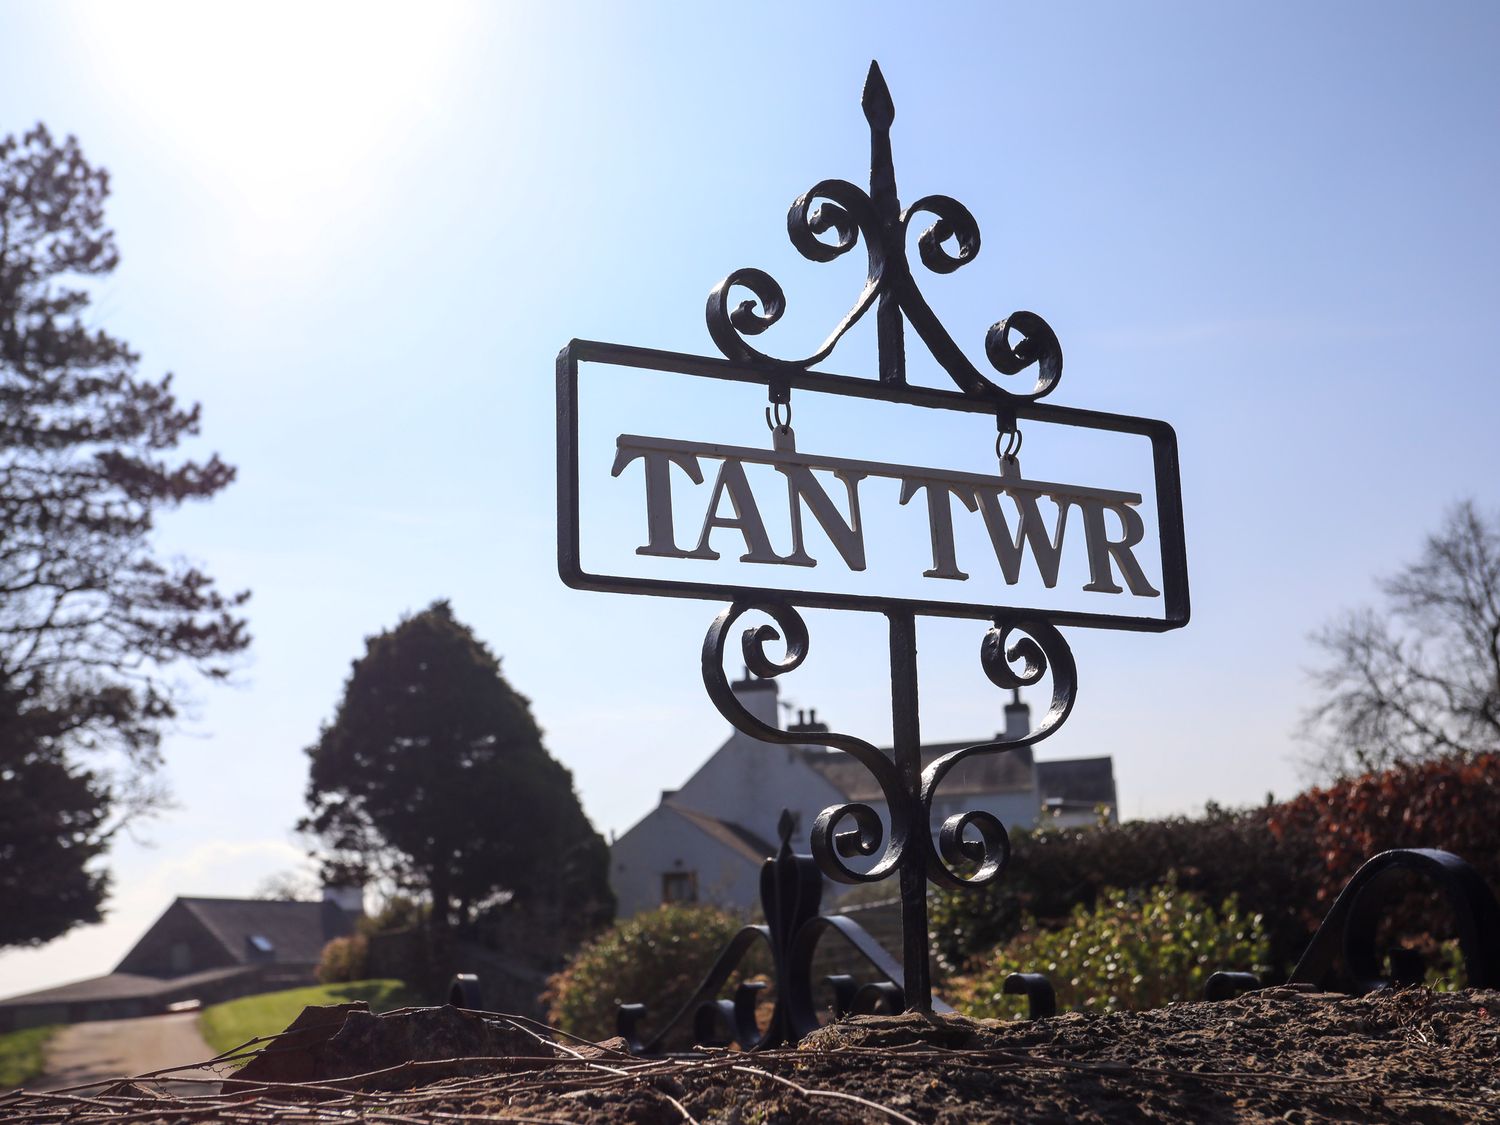 Tan Twr Farm Cottage, Dwyran